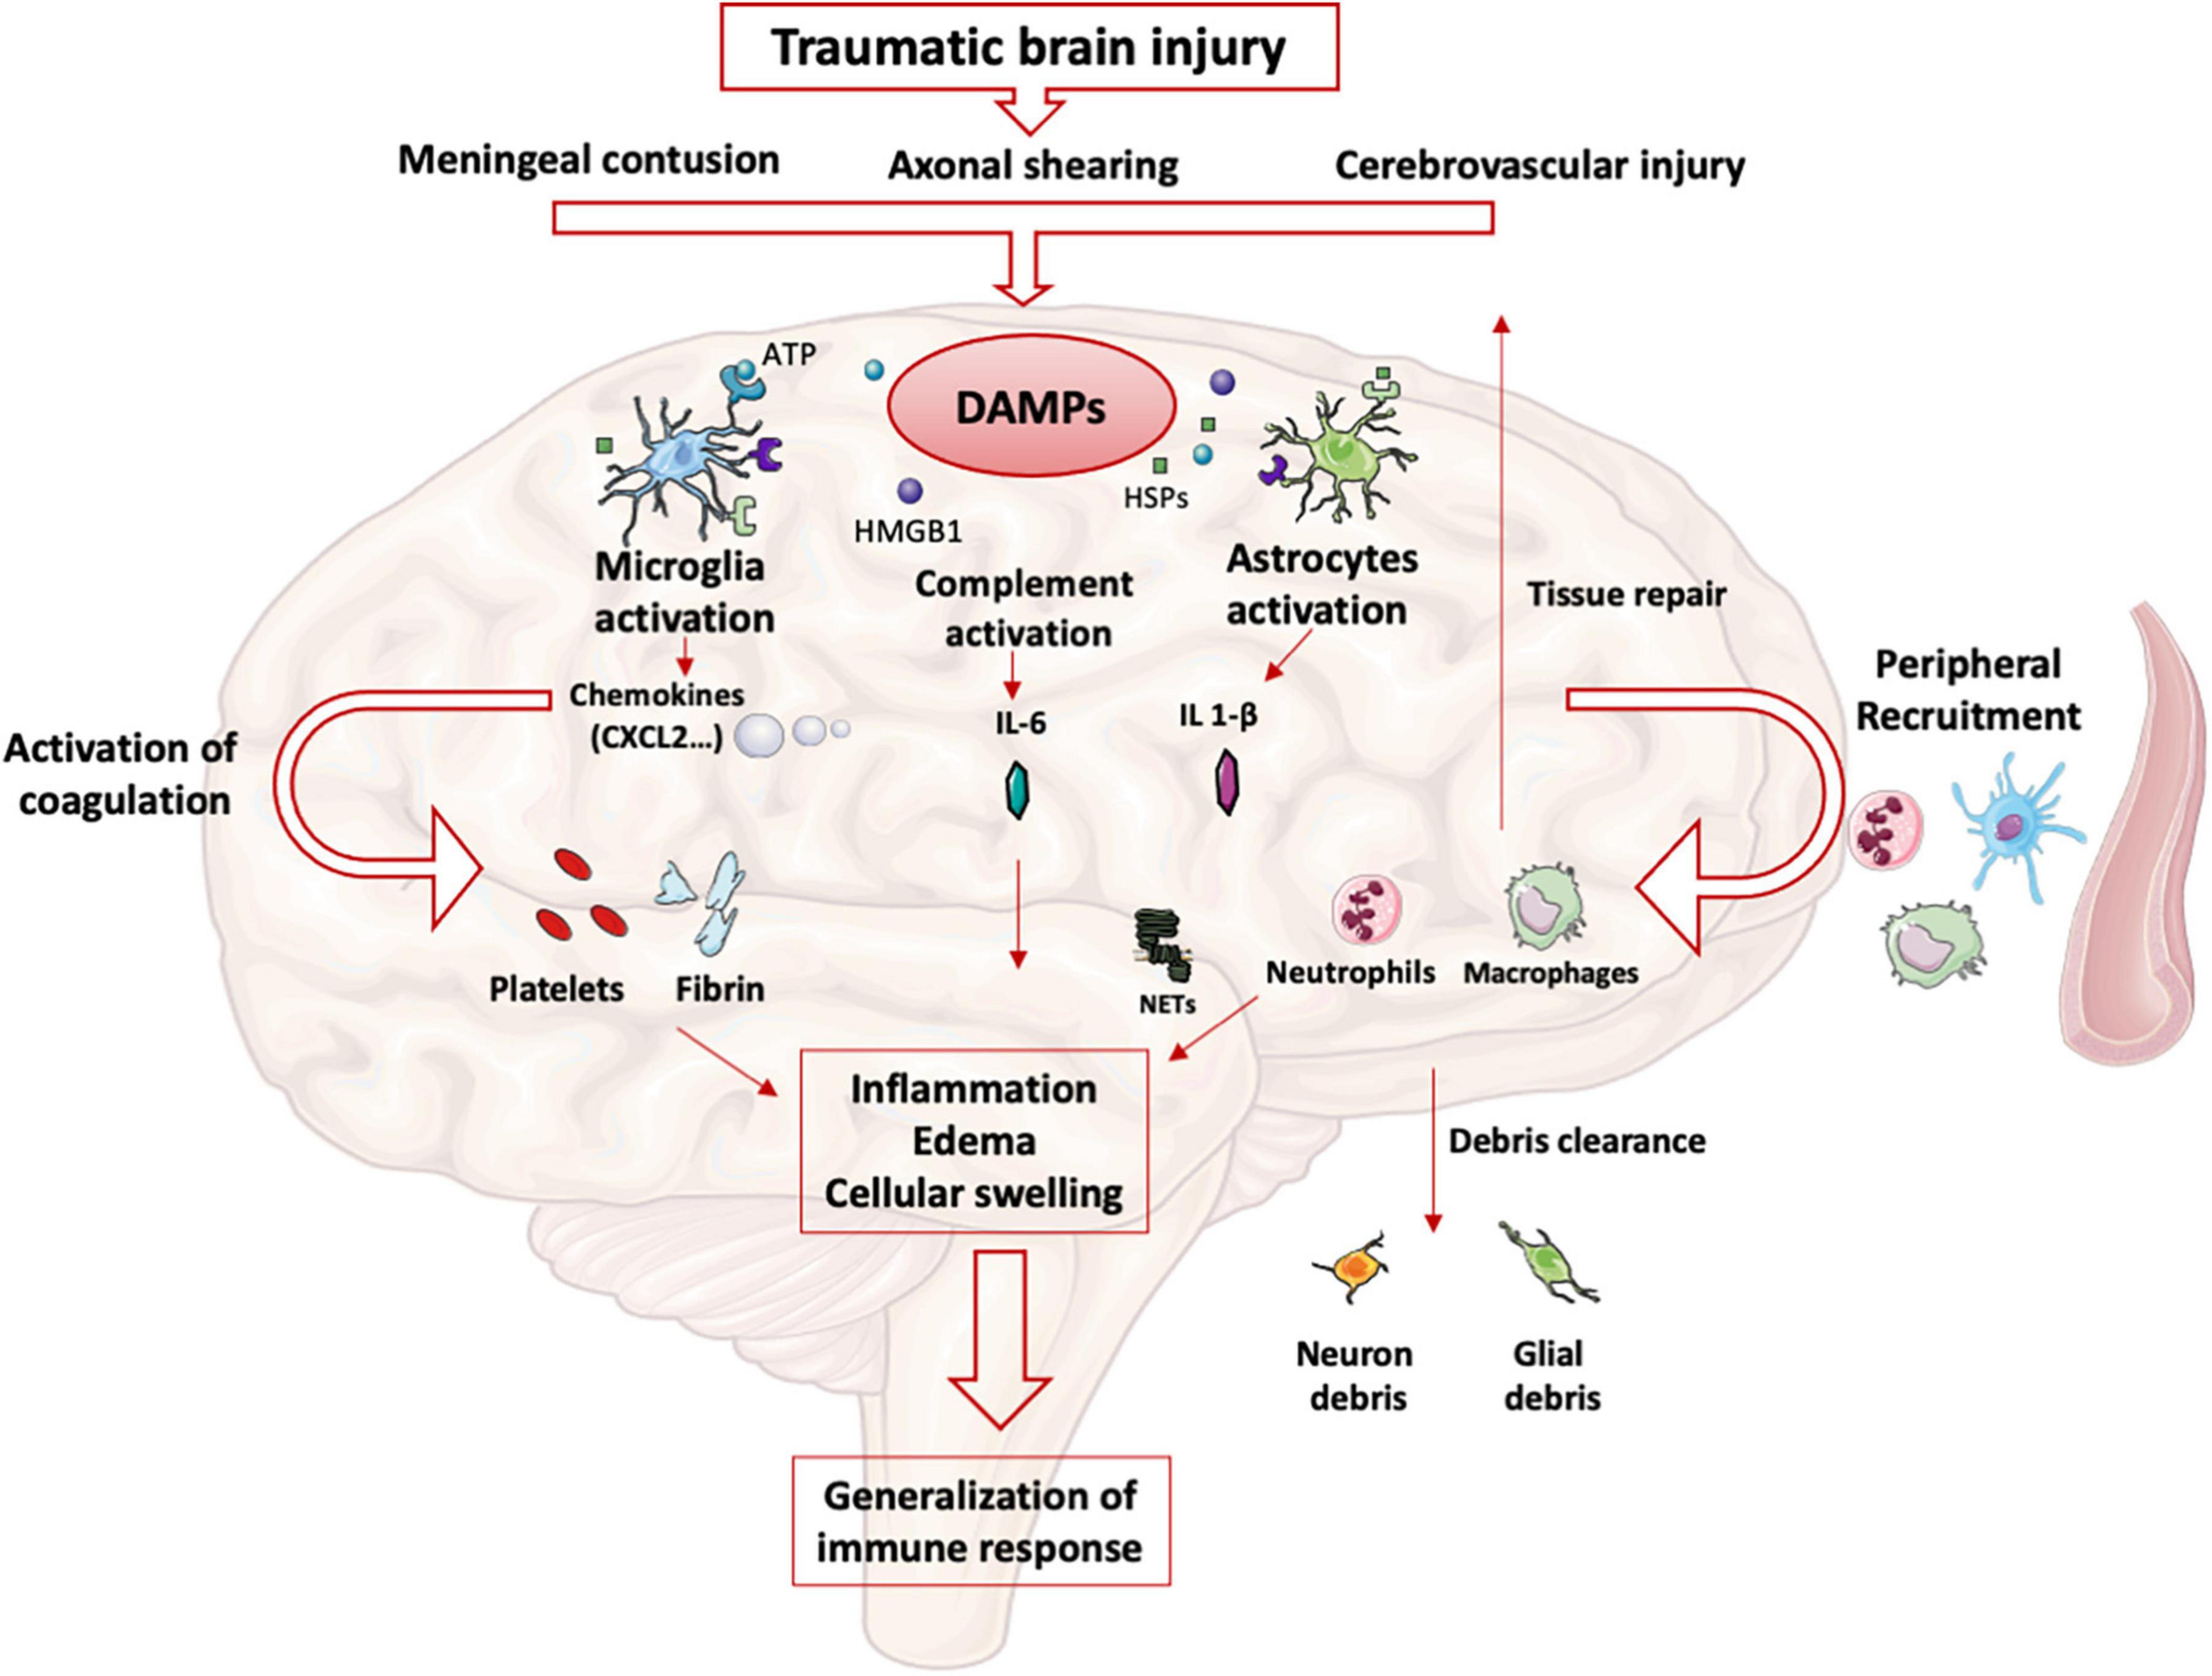 Assessment of neuroendocrine dysfunction following traumatic brain injury.